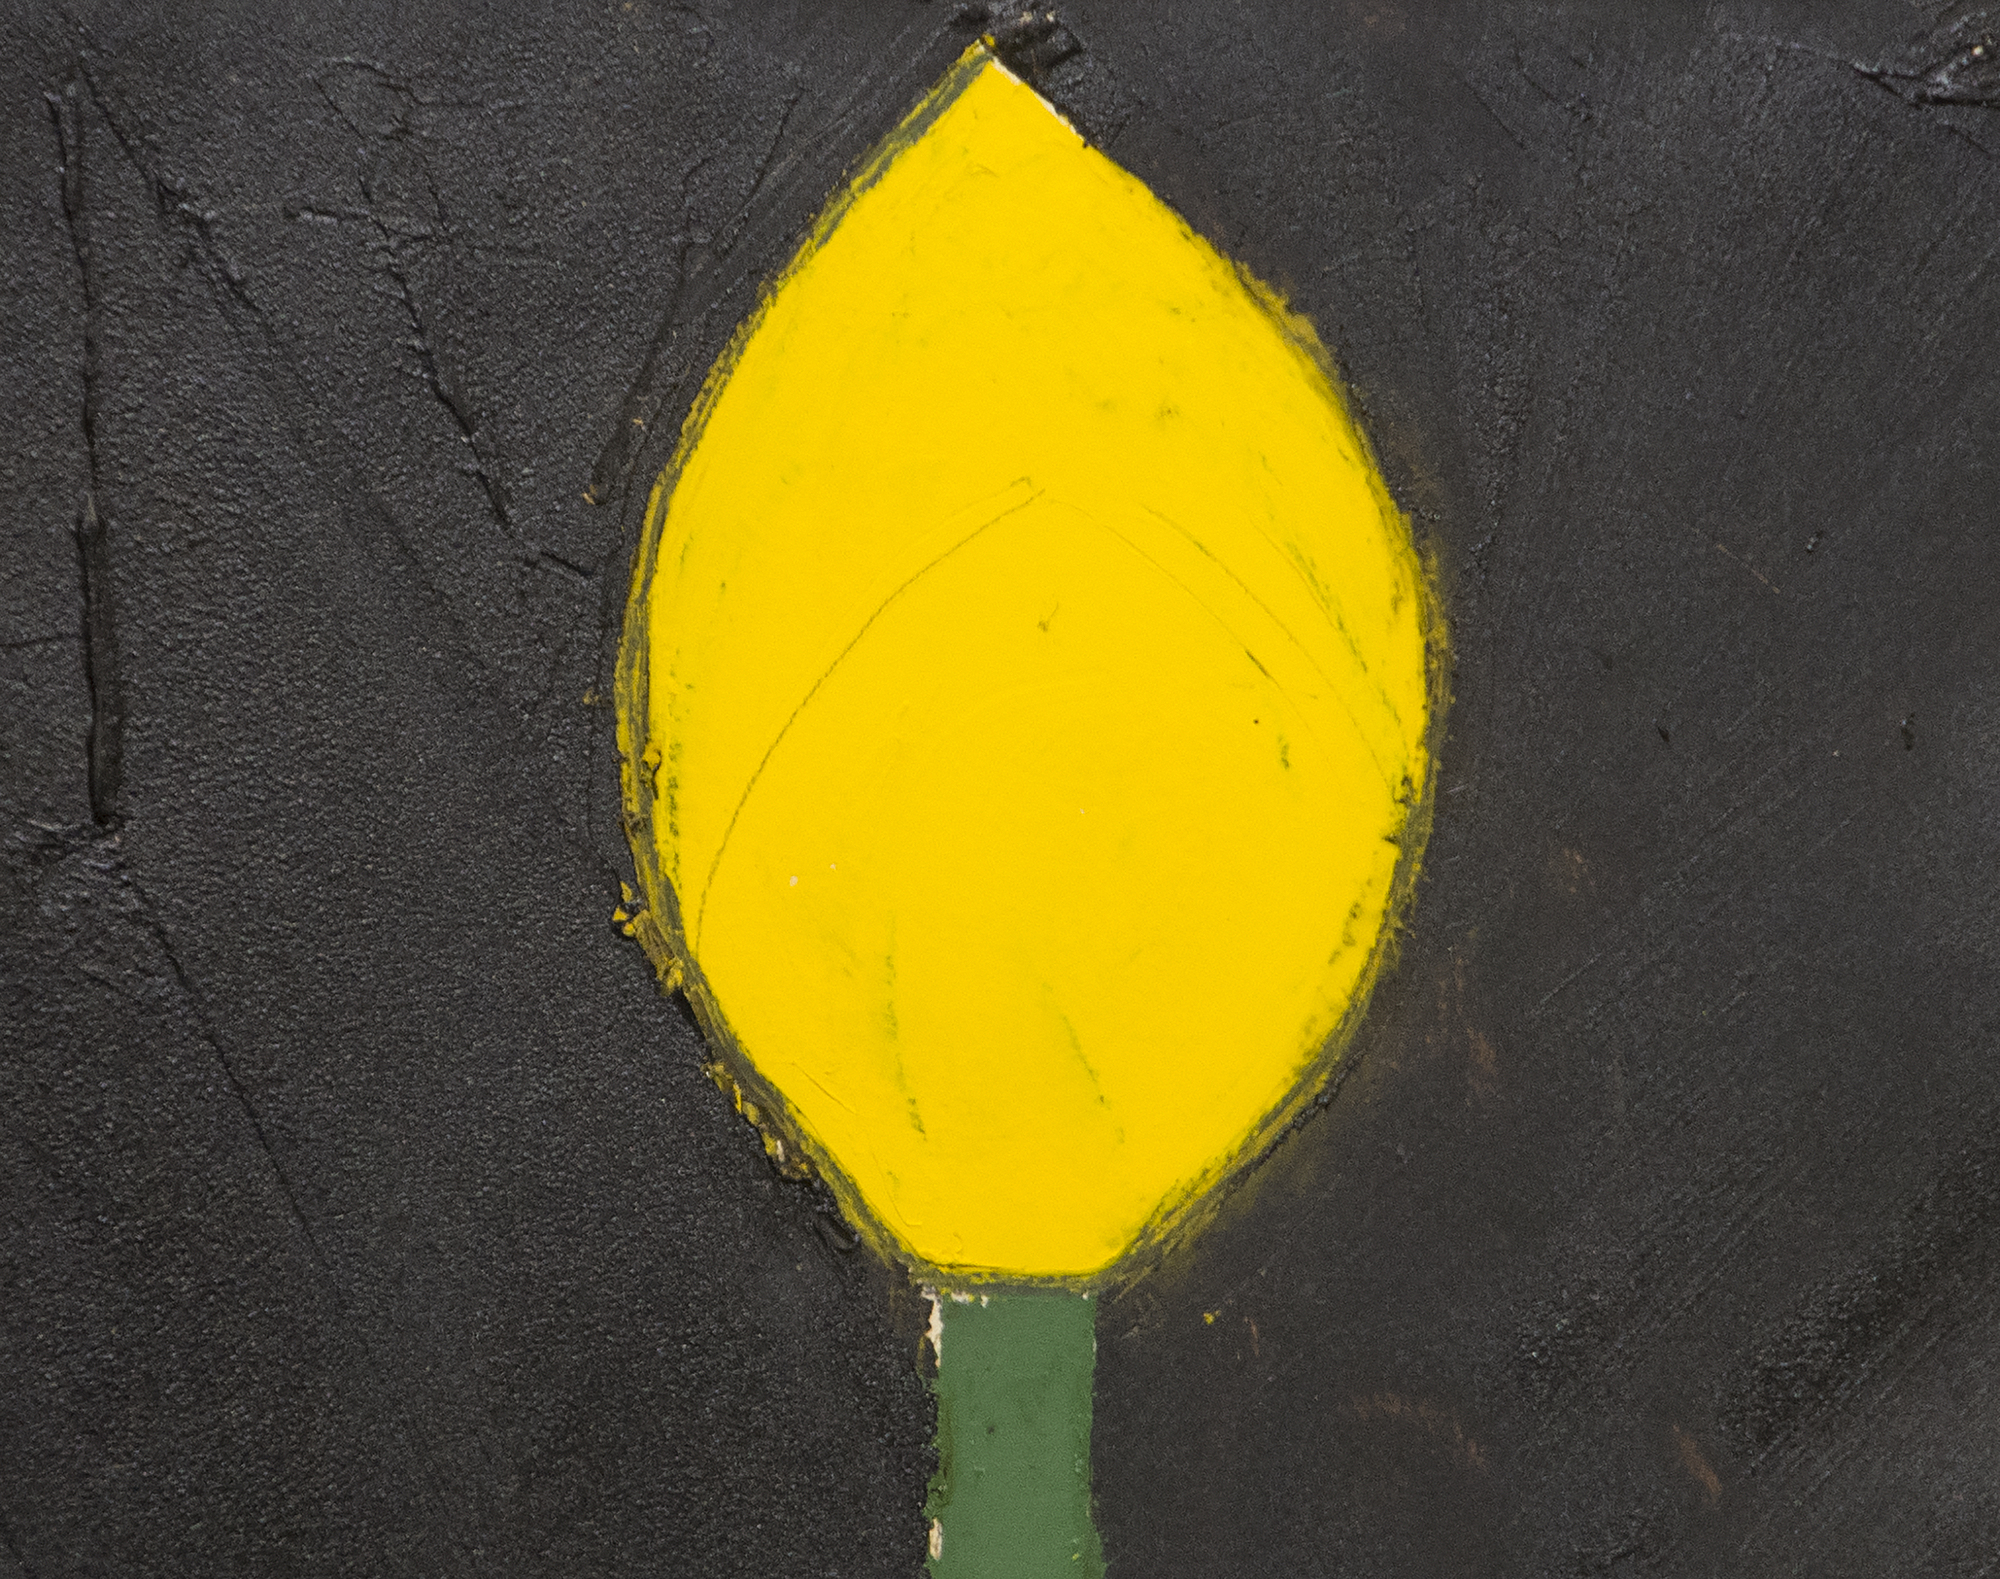 DONALD SULTAN - Tulipán amarillo nº 18 - óleo y alquitrán sobre papel - 20 x 20 pulg.